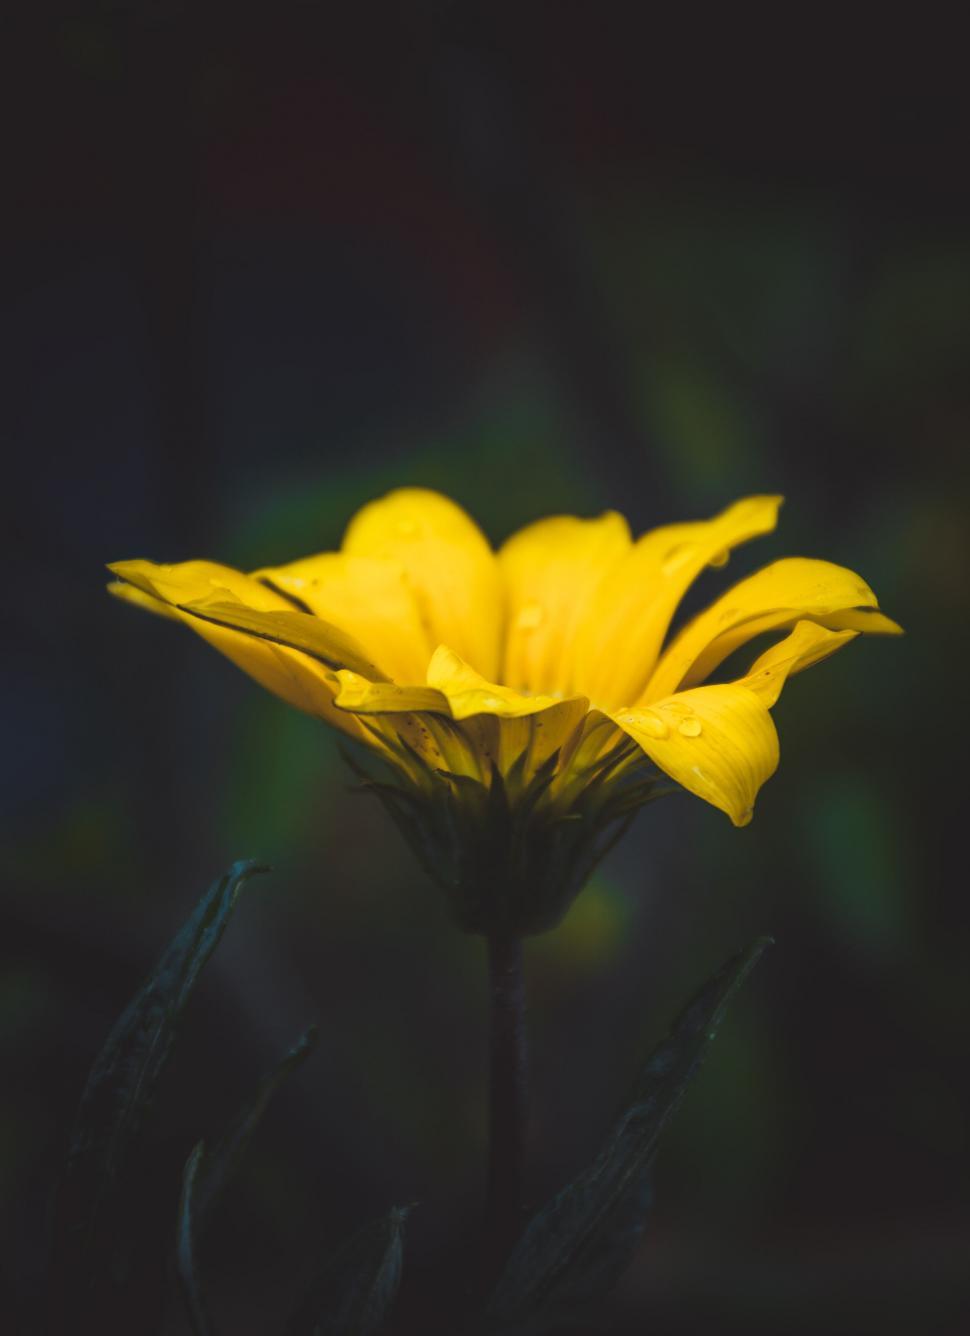 Free Image of Vivid yellow flower isolated on dark background 